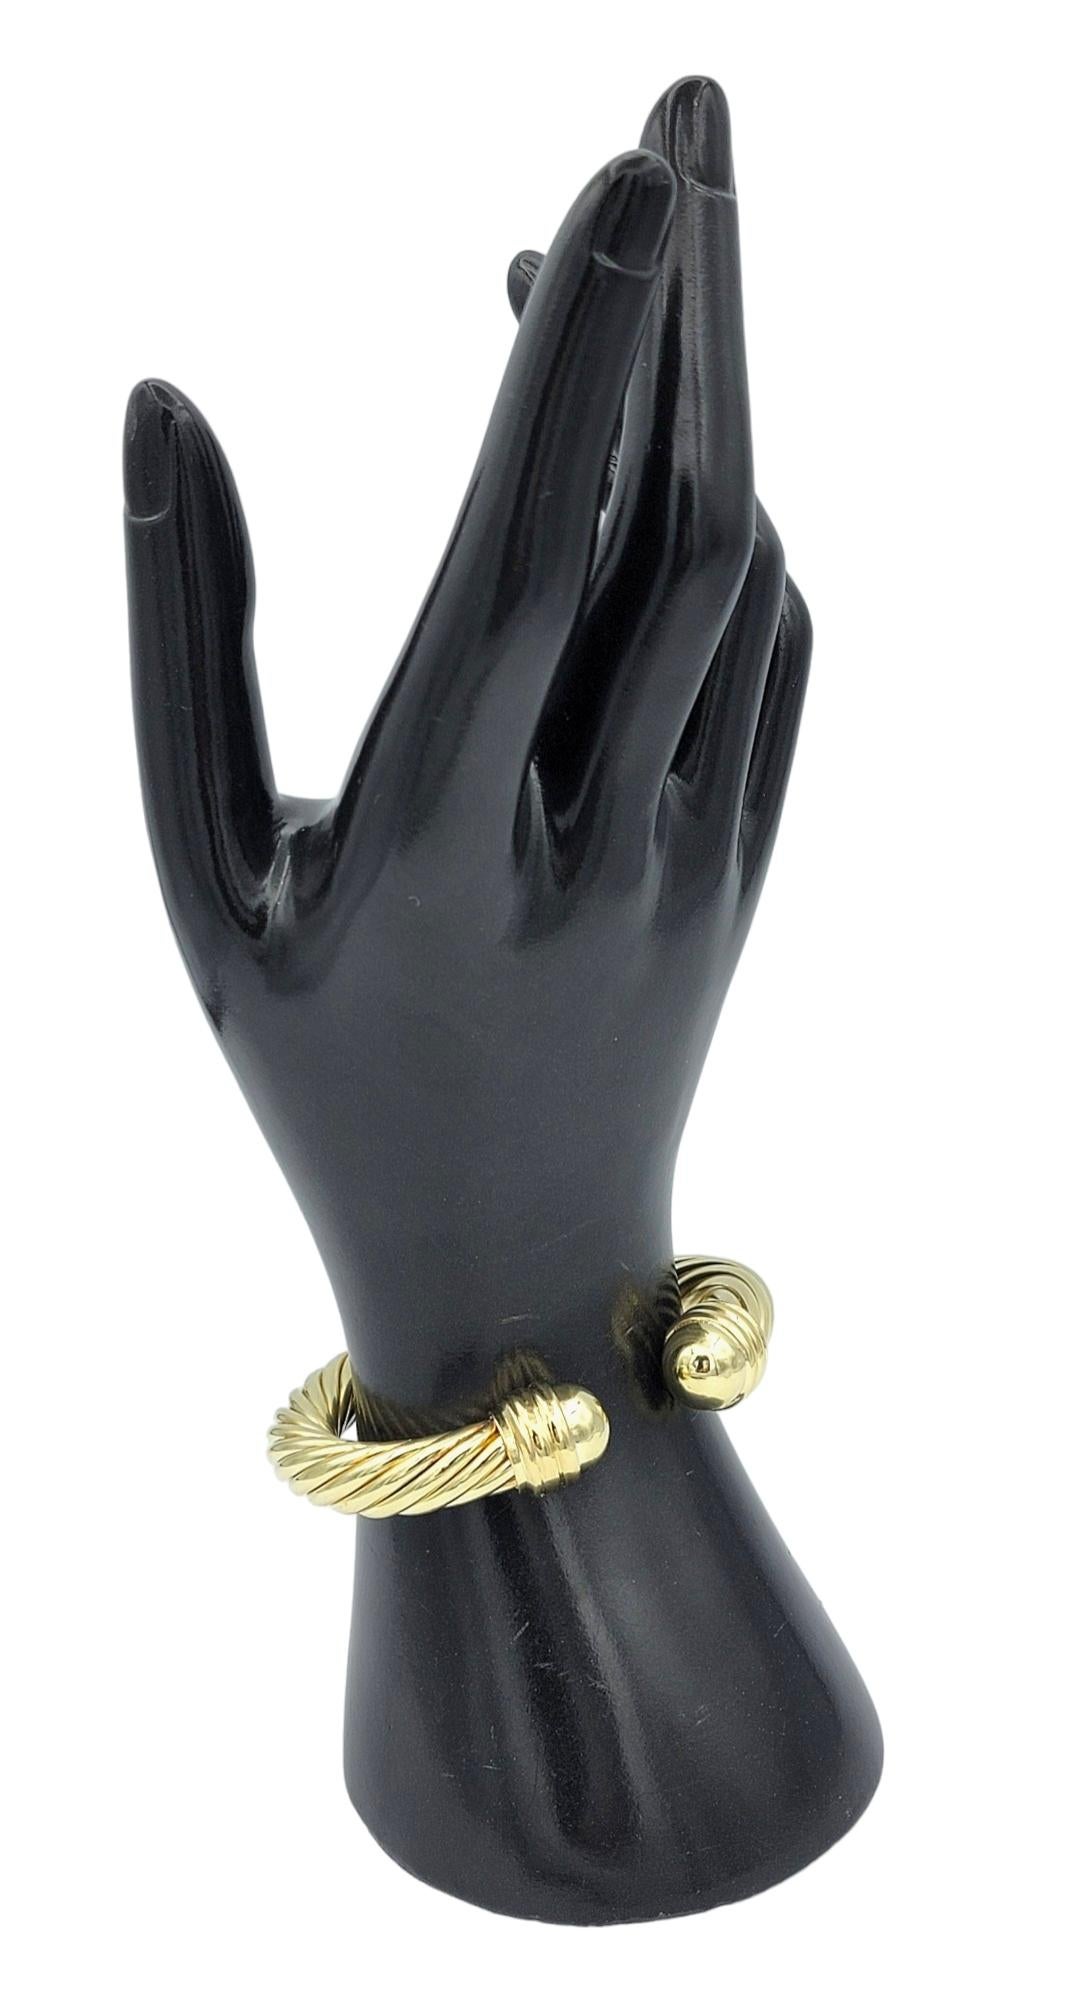 David Yurman Cable Classics 10 mm Hinged Cuff Bracelet in 14 Karat Yellow Gold For Sale 1